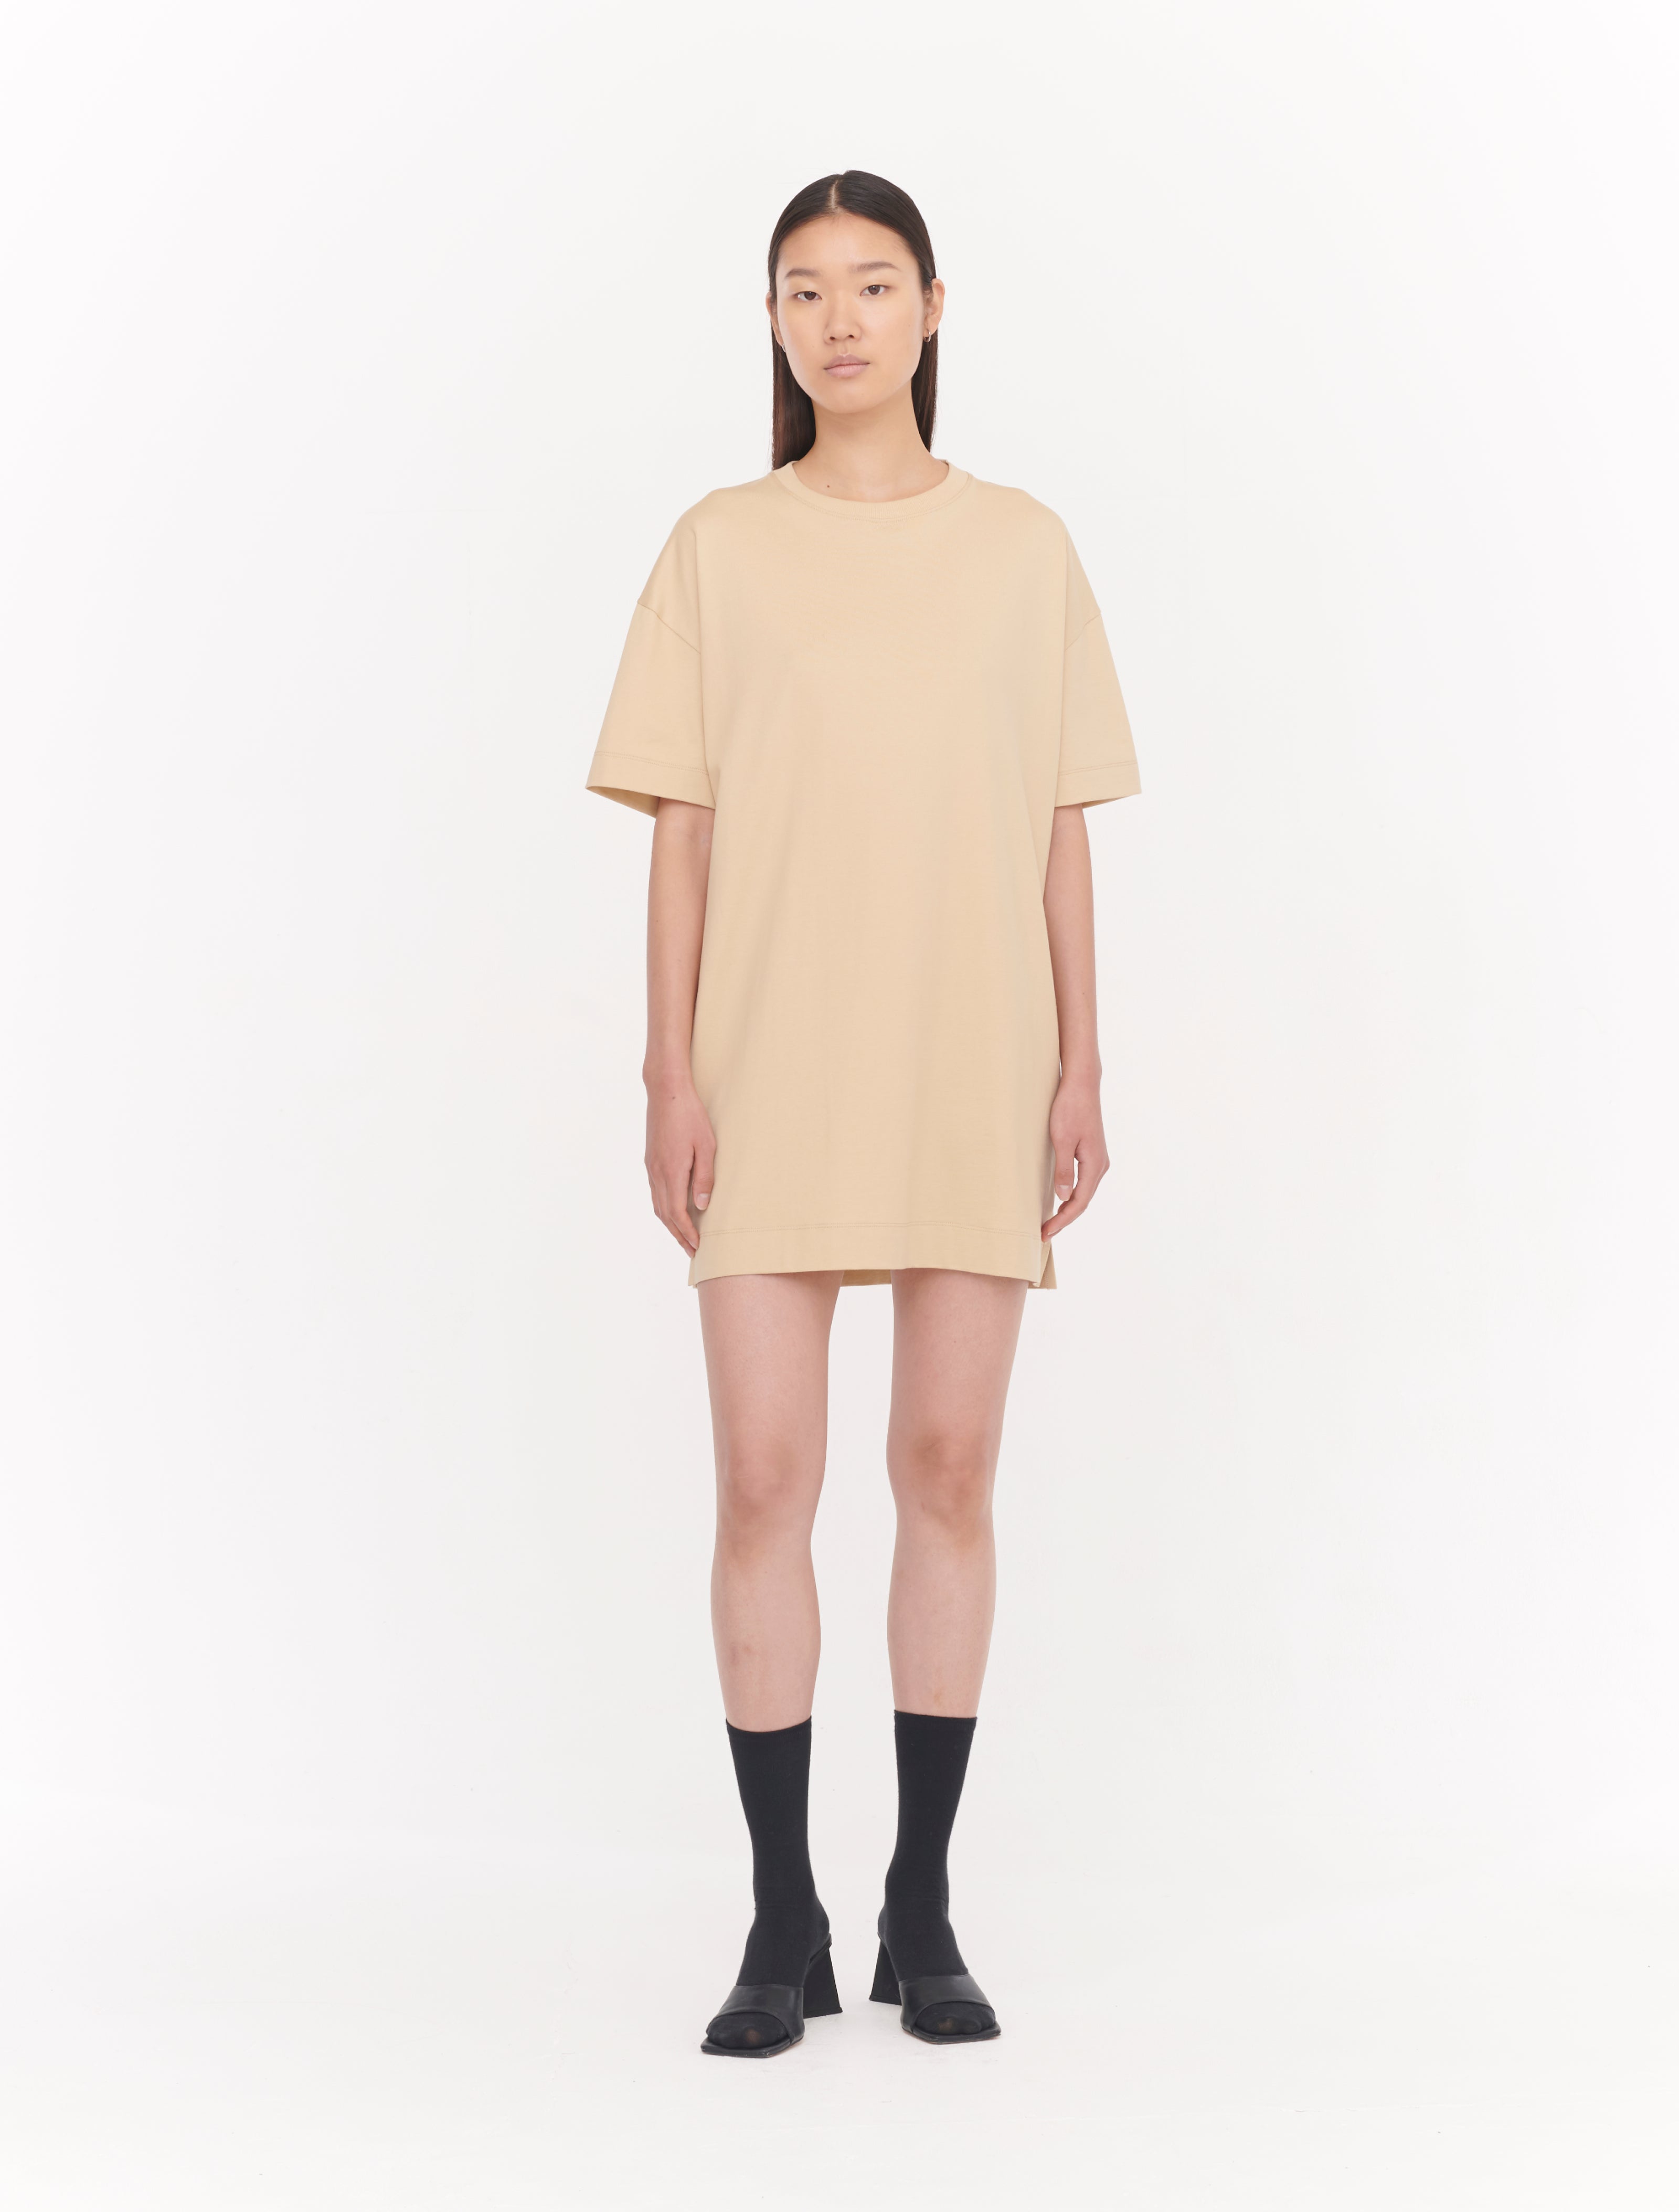 Ninety Percent Natalie T-Shirt Dress in Warm Sand